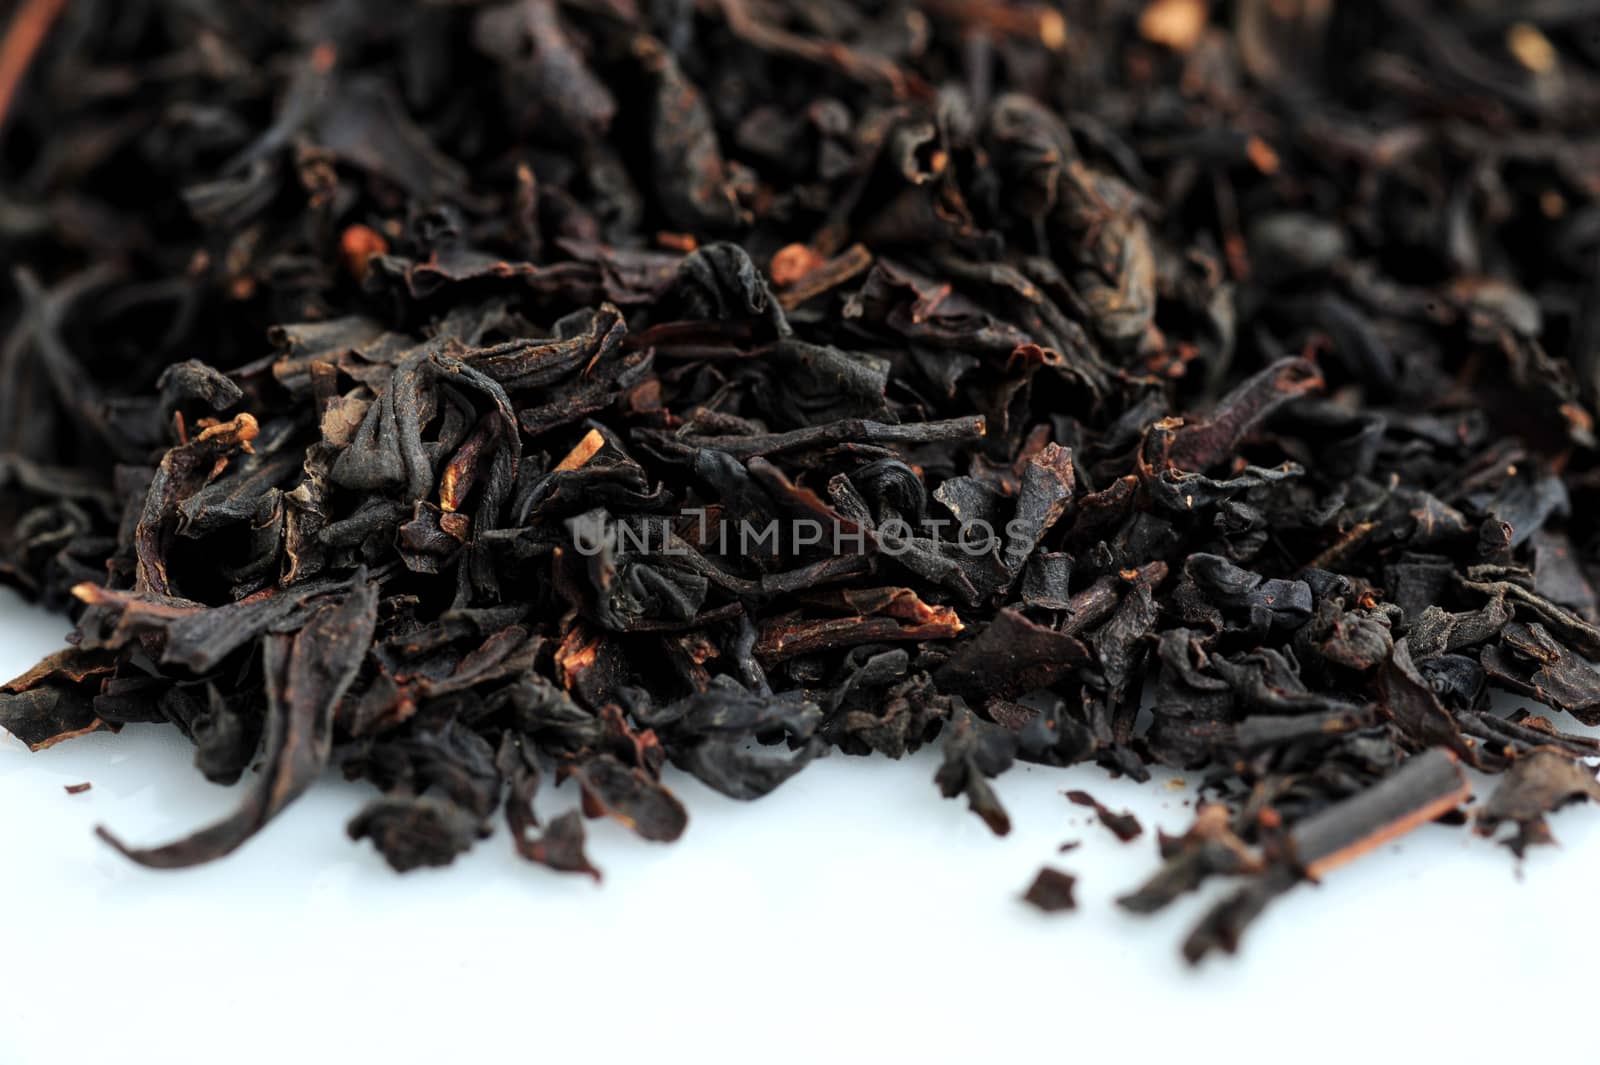 Chinese Loose Black Tea isolated on white background